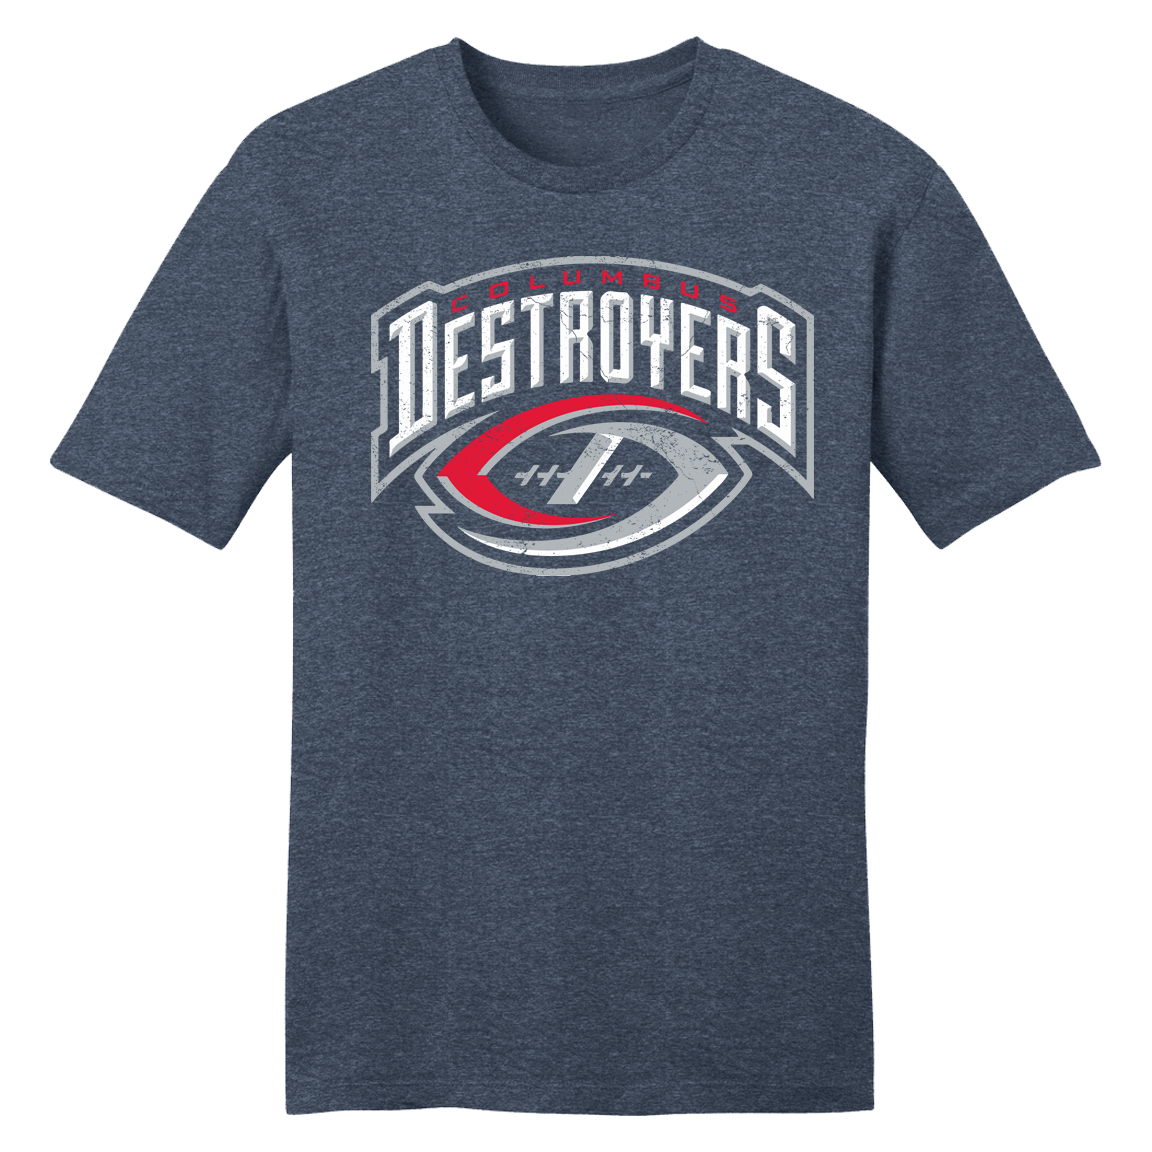 Columbus Destroyers Football T-shirt